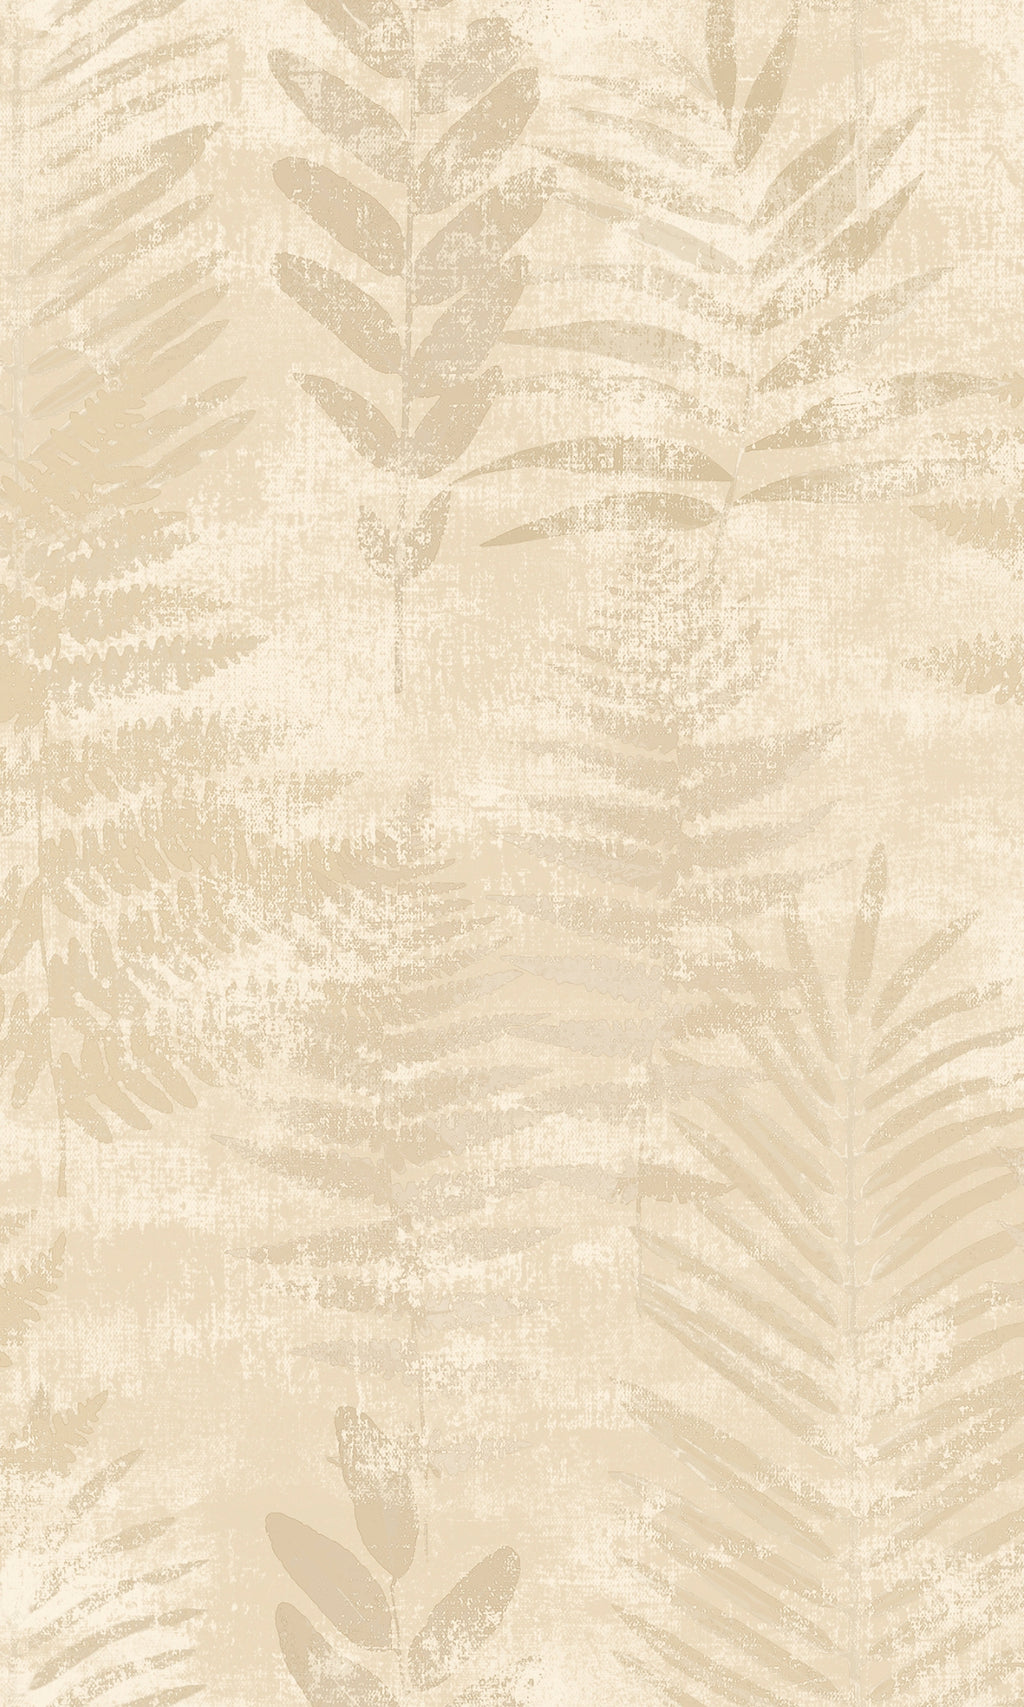 Natural Fern Leaves Tropical Wallpaper R8179